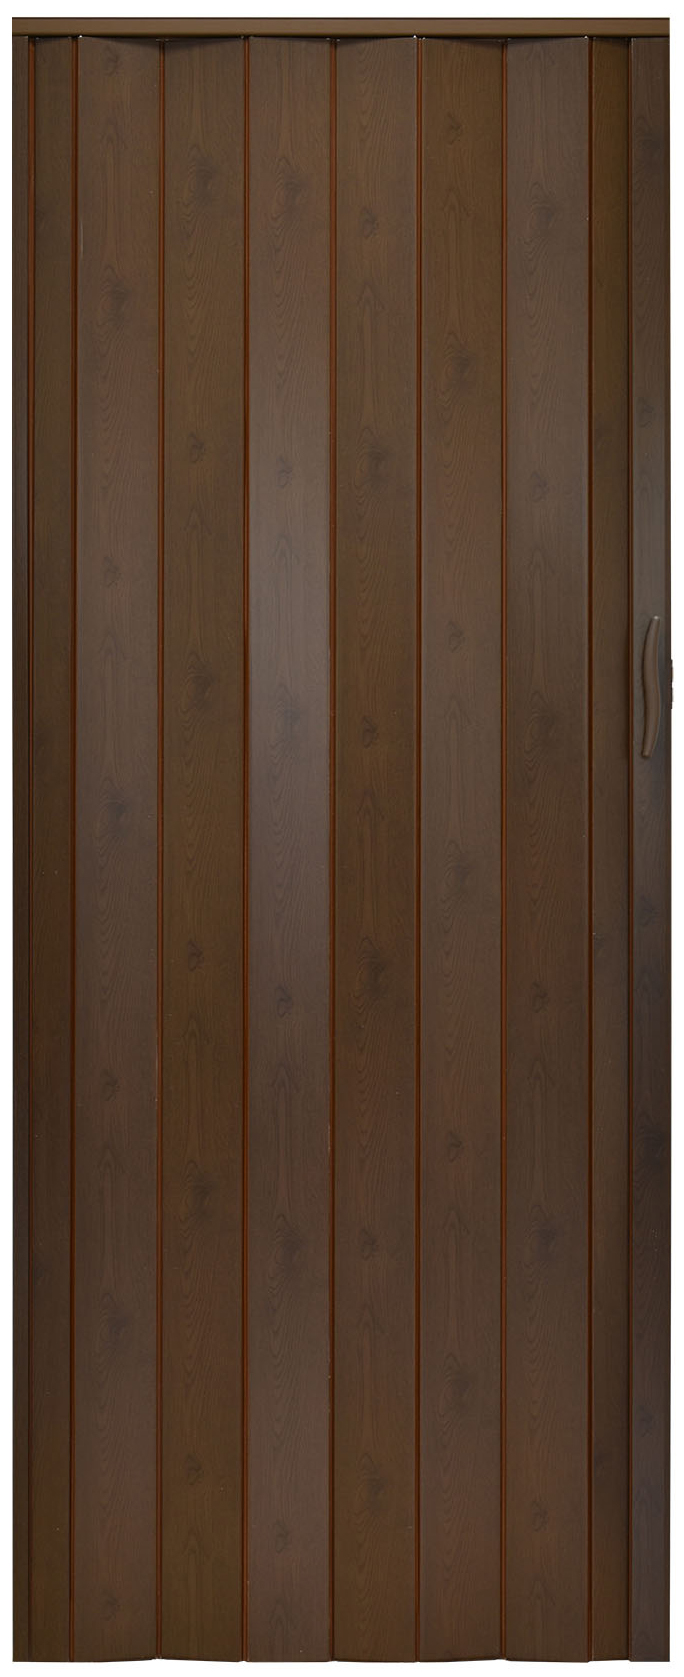 Drzwi harmonijkowe 001S - 80 cm - 029 mahoń mat